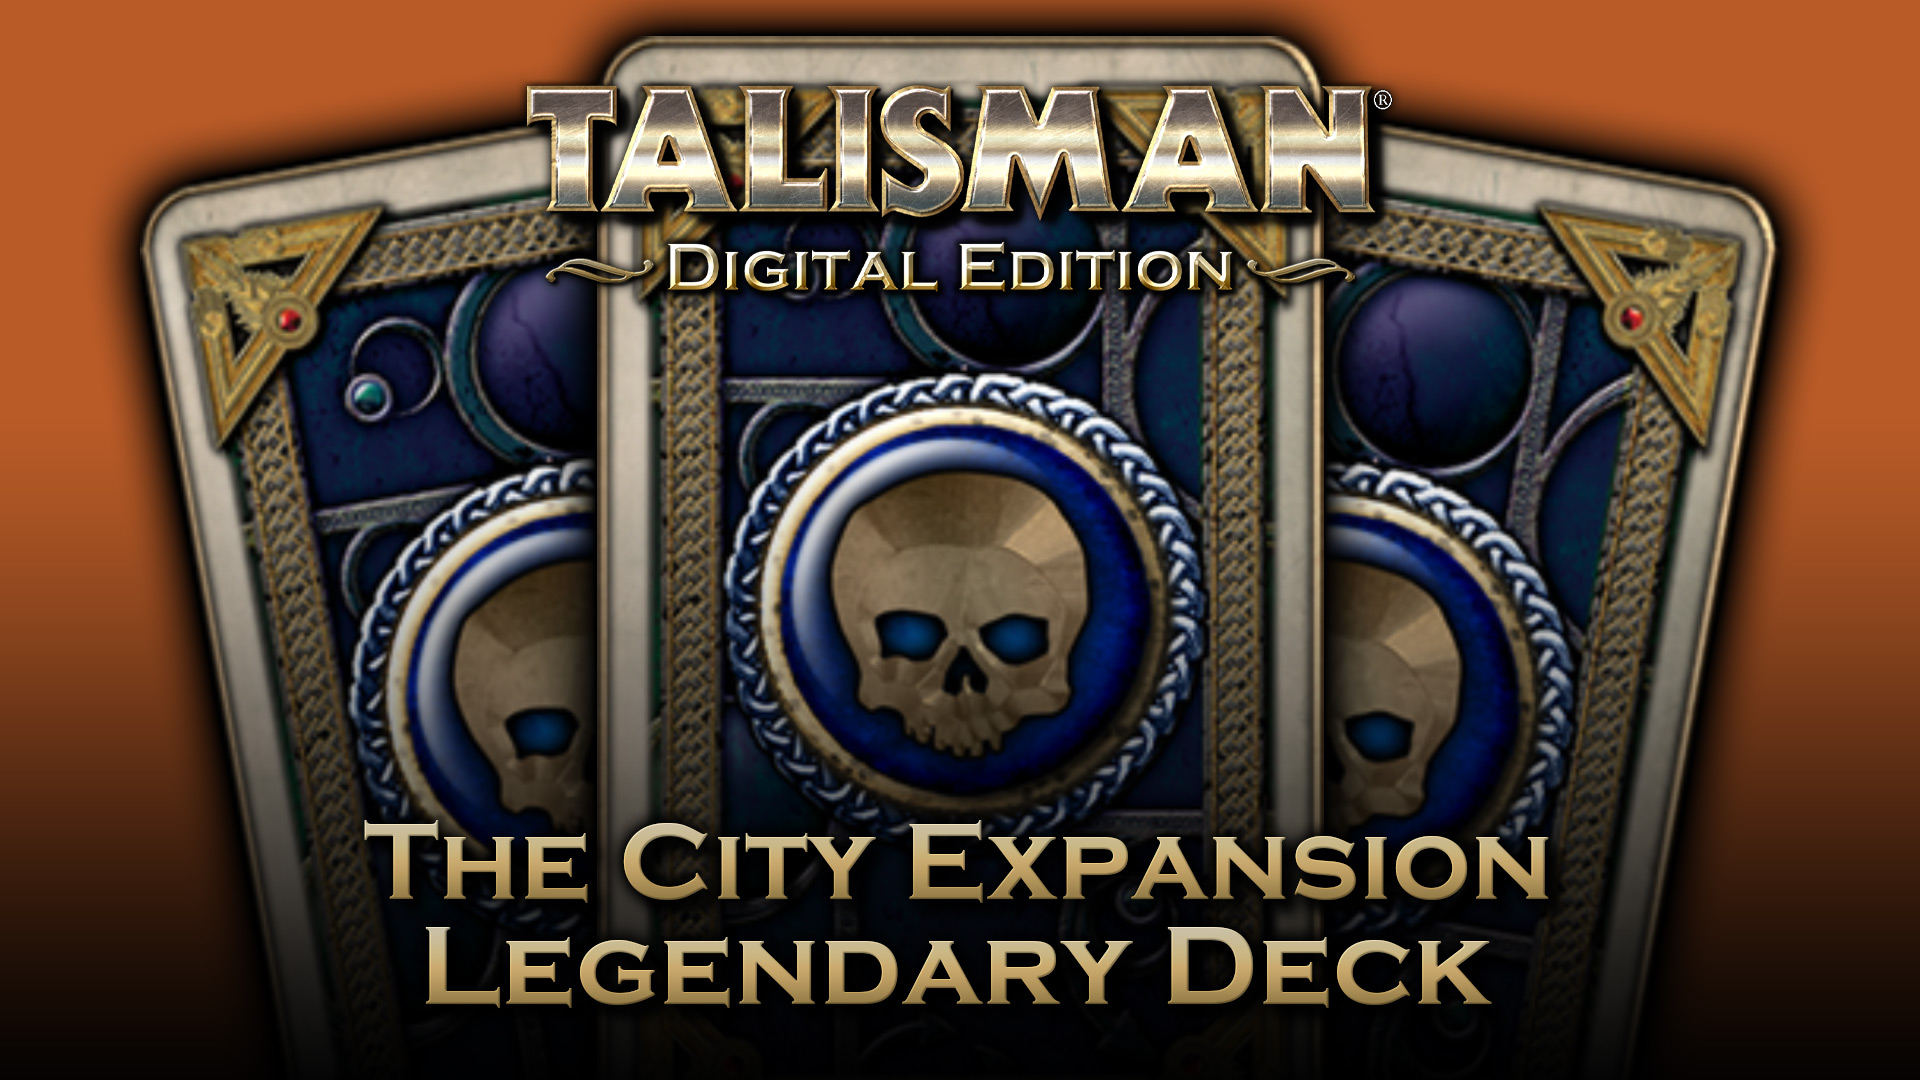 The City Expansion: Legendary Deck